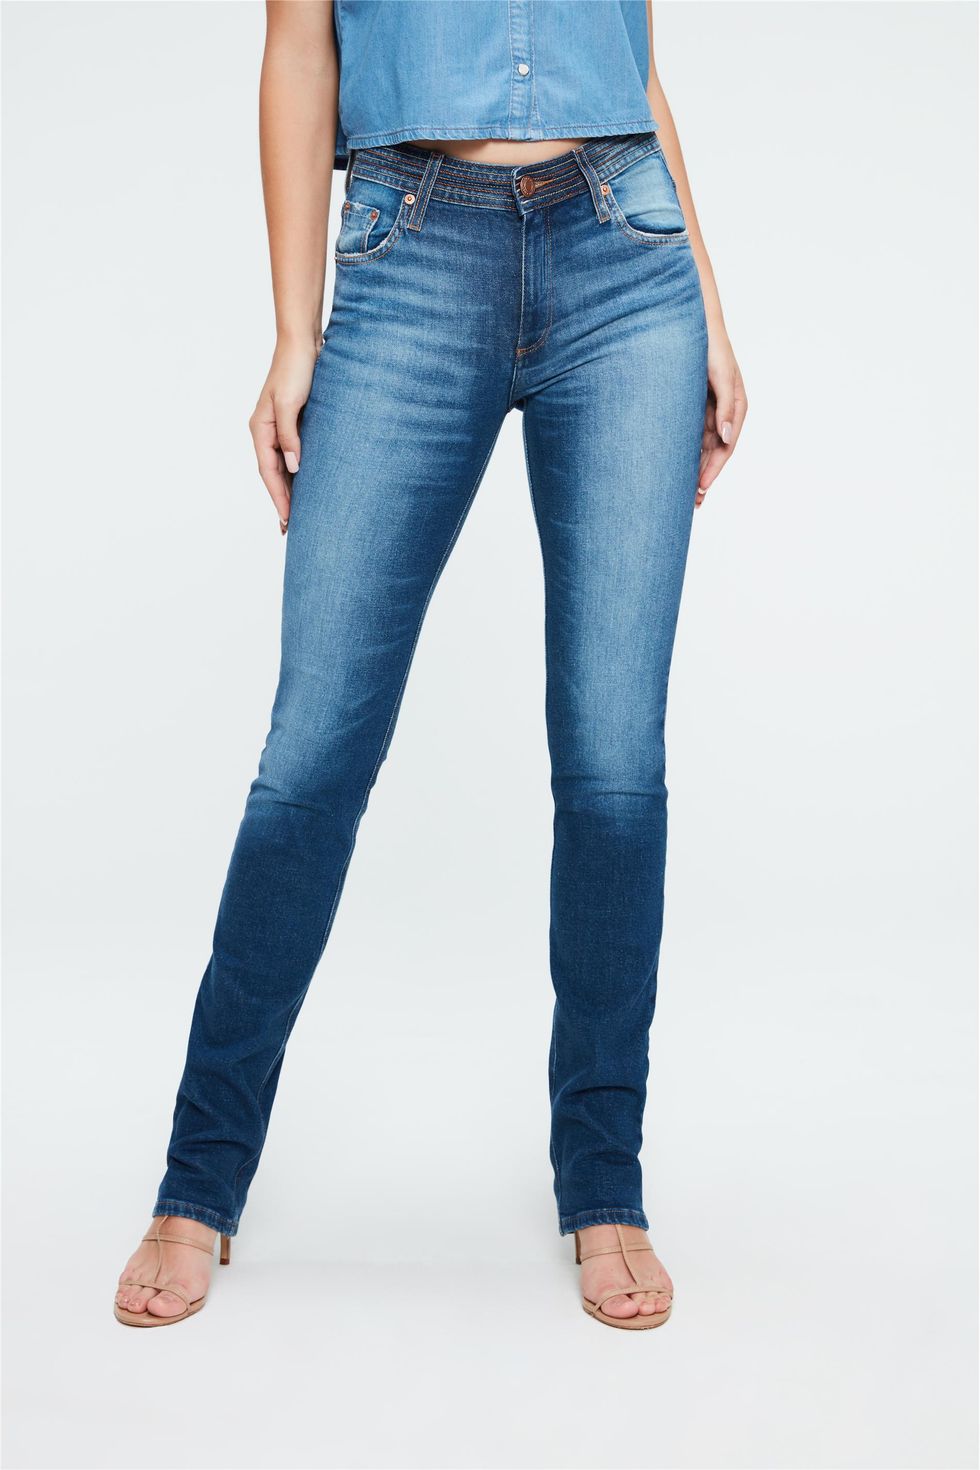 calça jeans damyller